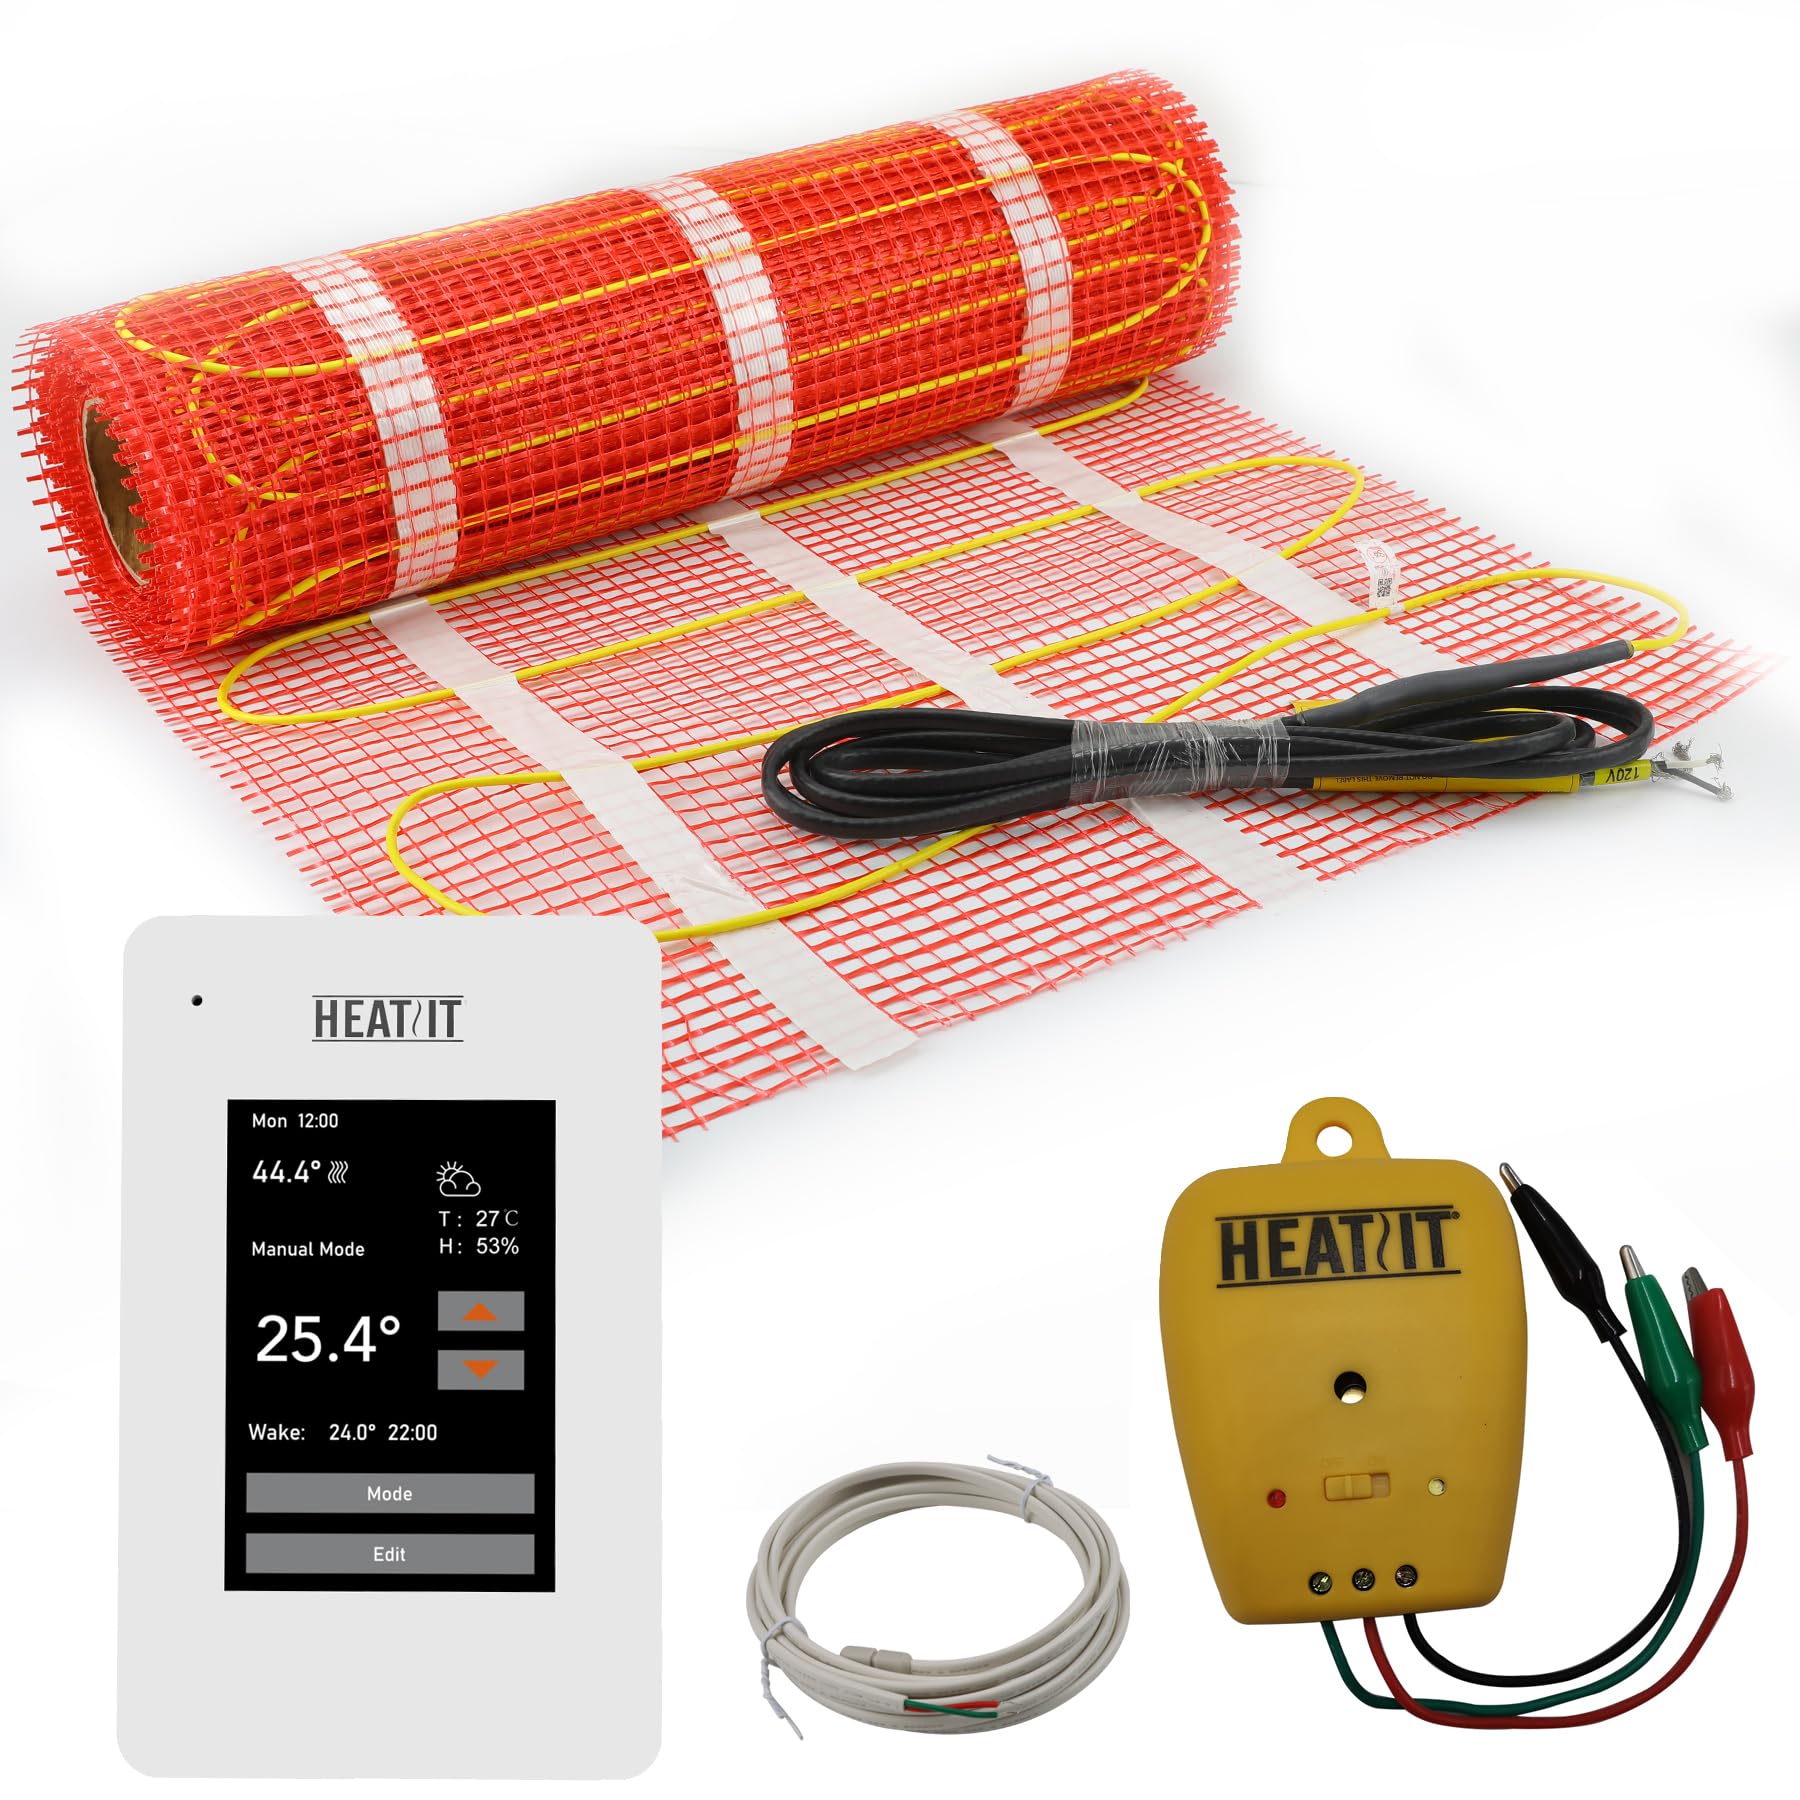 40 sqft HEATIT Warmmat Electric Radiant Self-adhesive Floor Heat Heating System & ET-7A Thermostat & Alarm Monitor